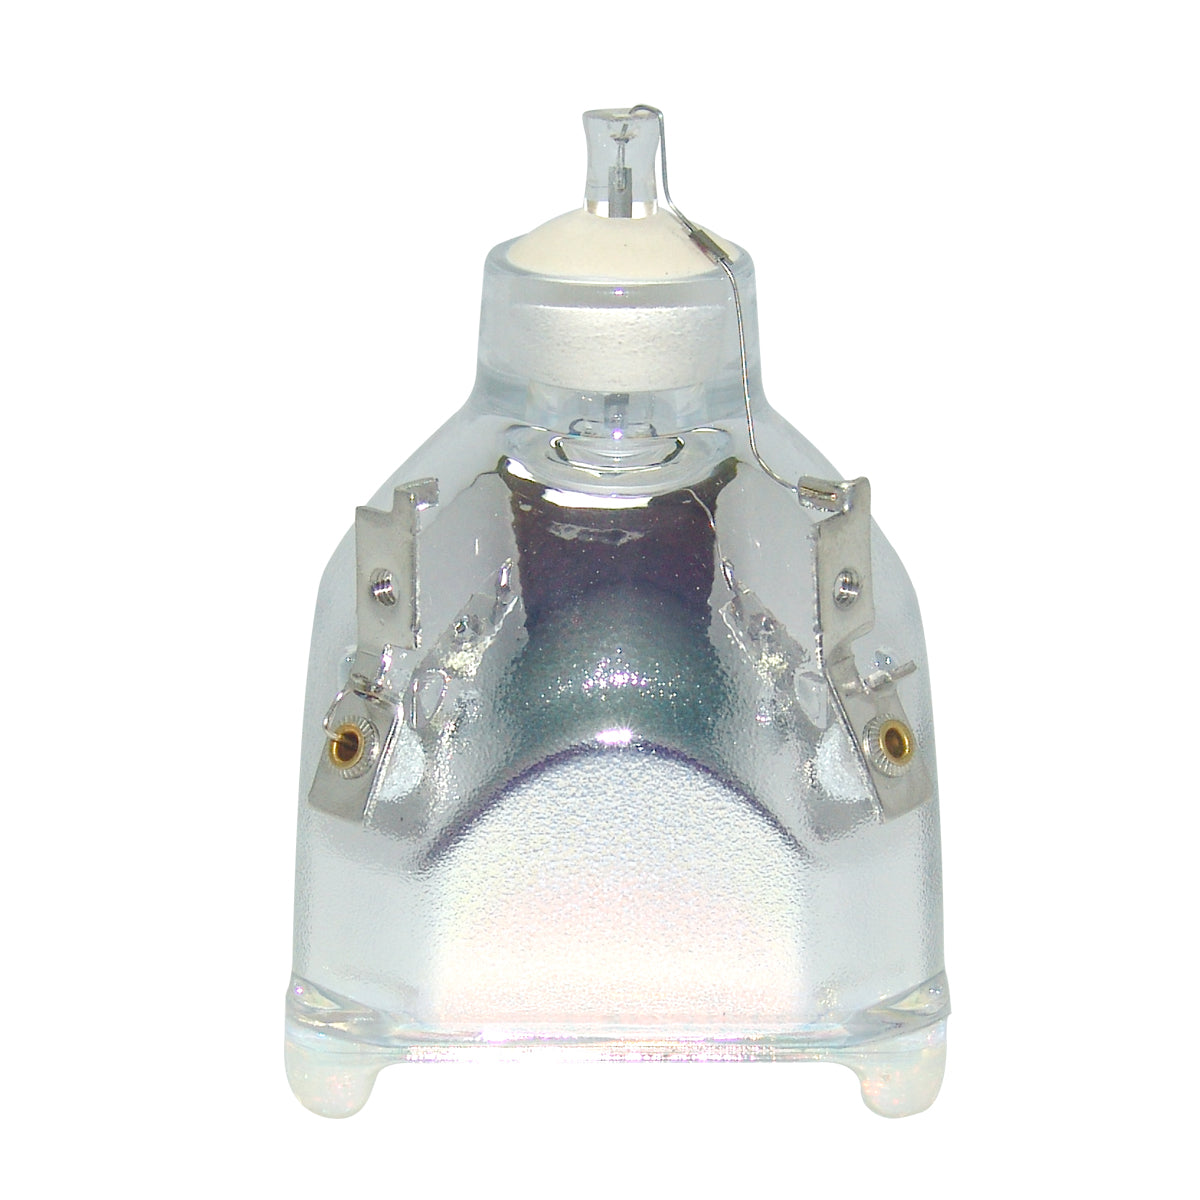 Dukane 456-243 Osram Projector Bare Lamp